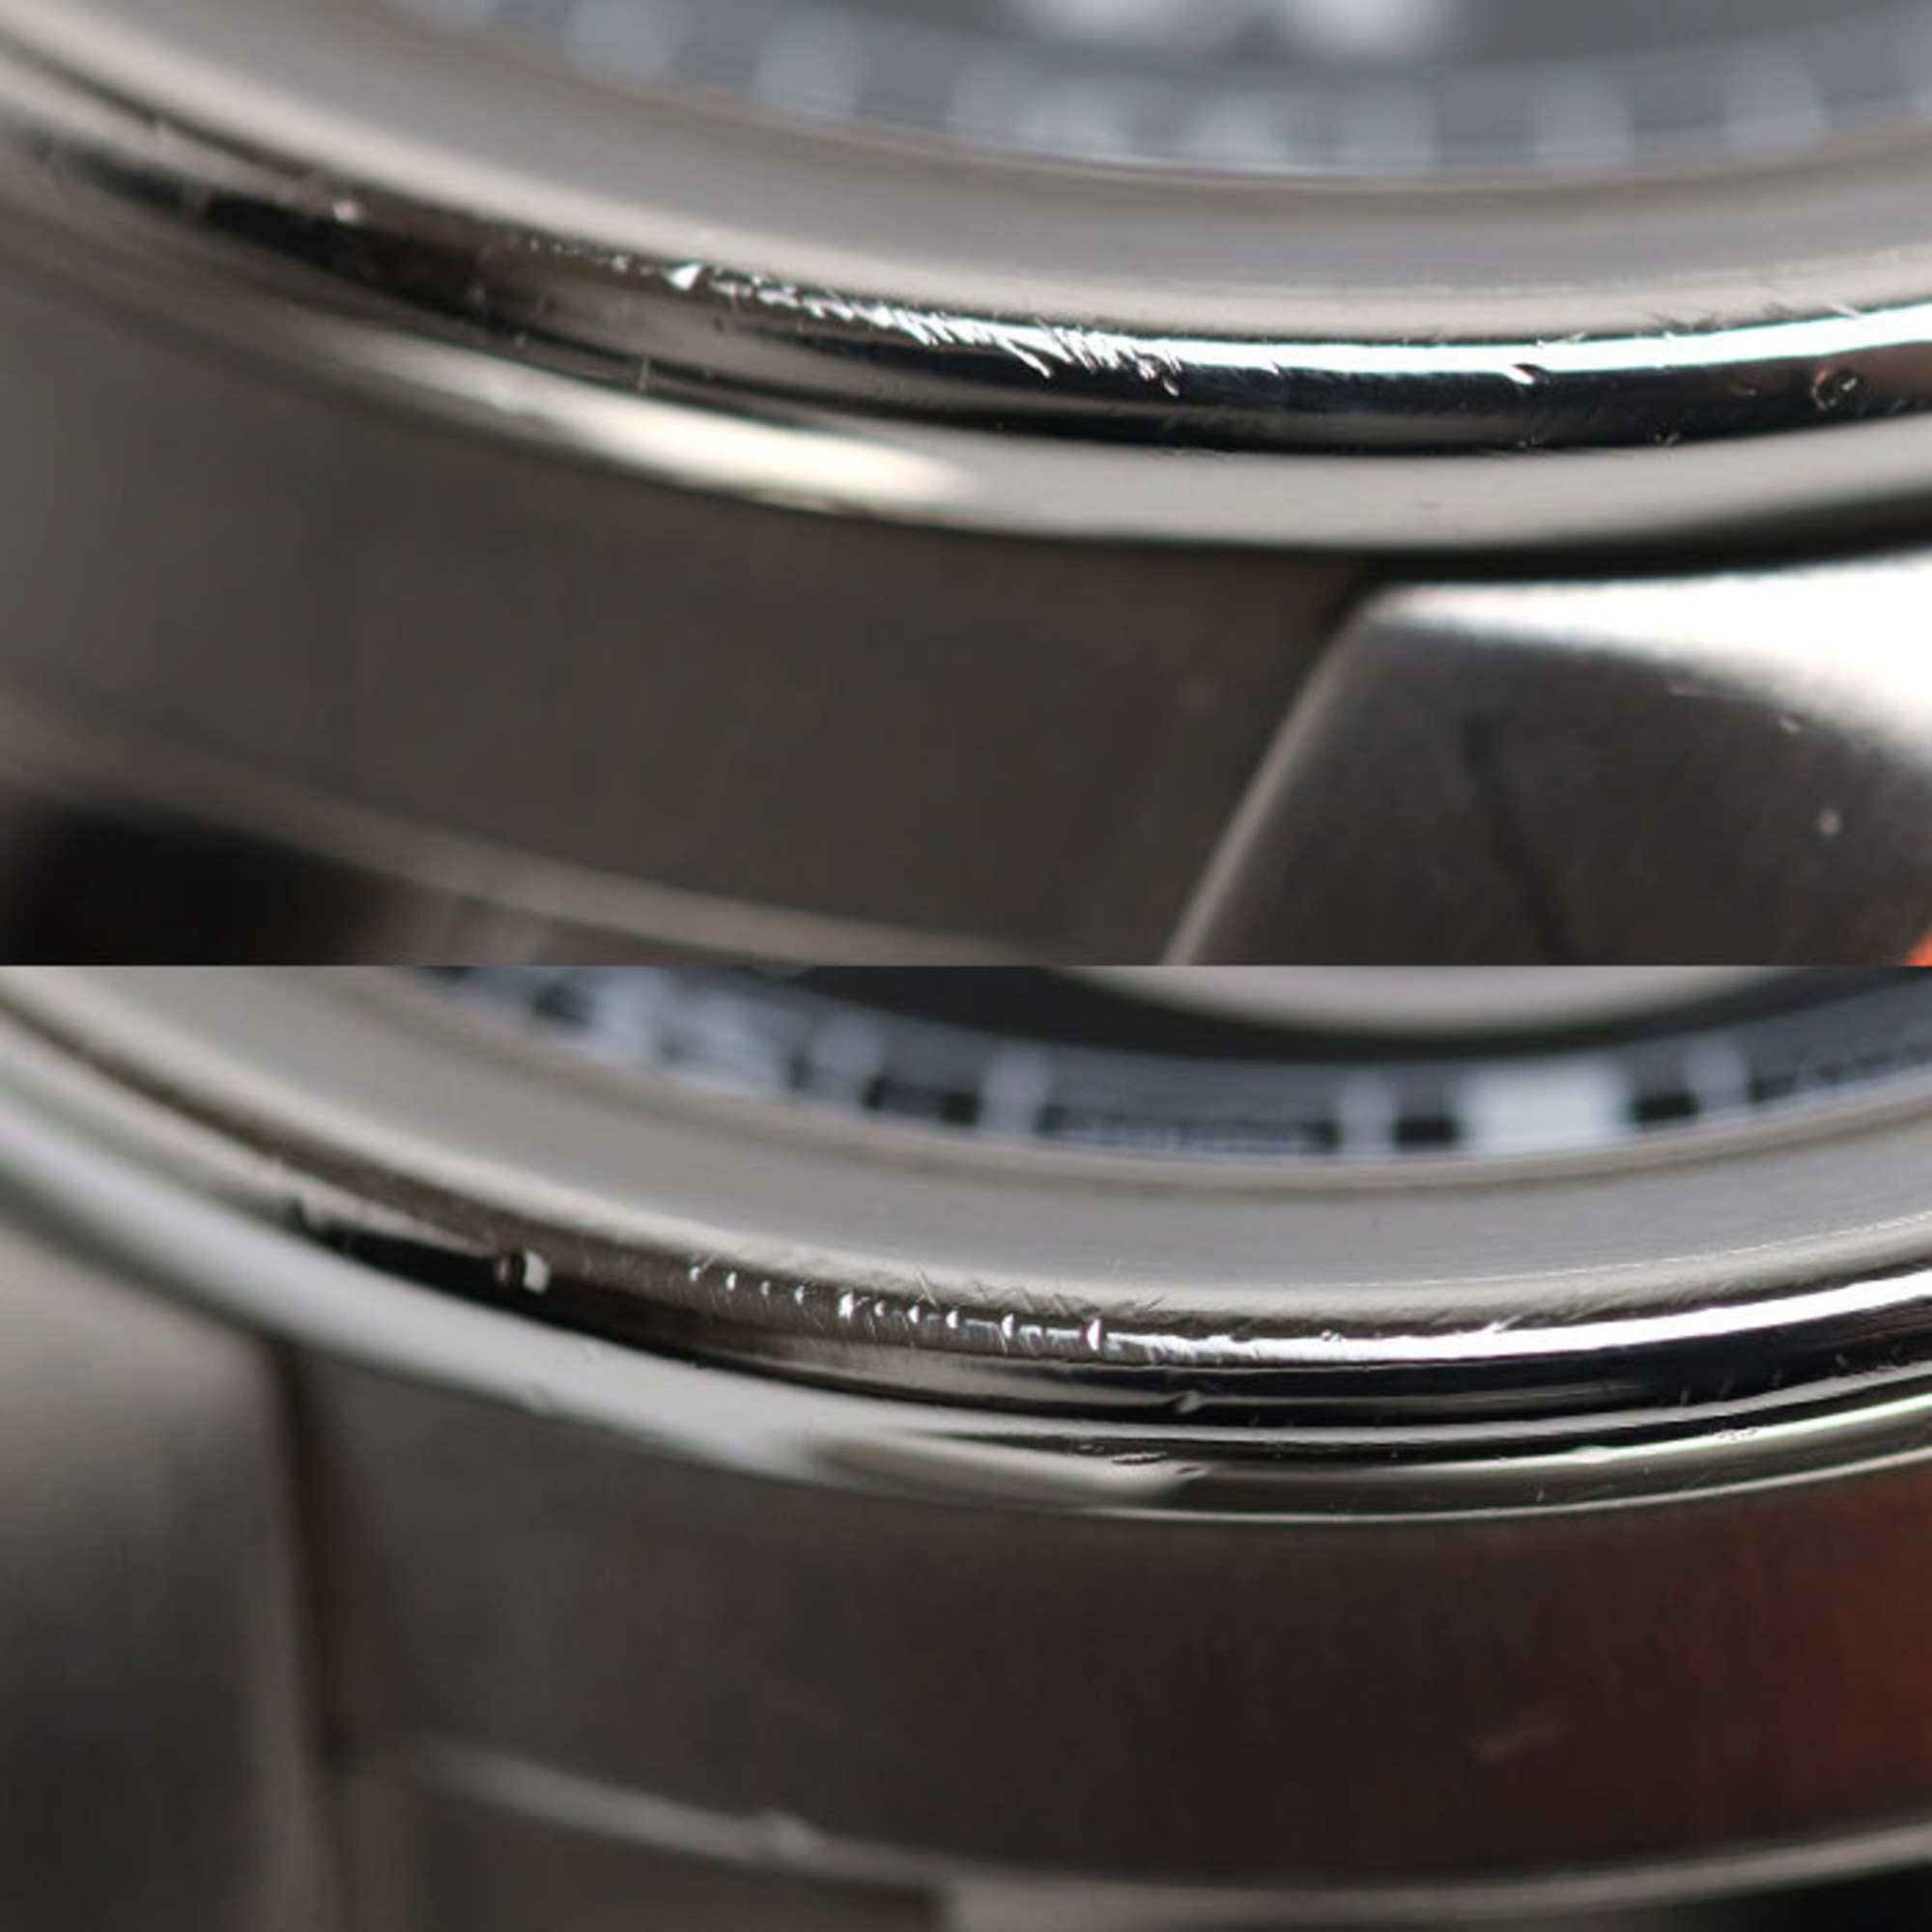 CARTIER Caliber de Cartier watch automatic winding W7100015 men's